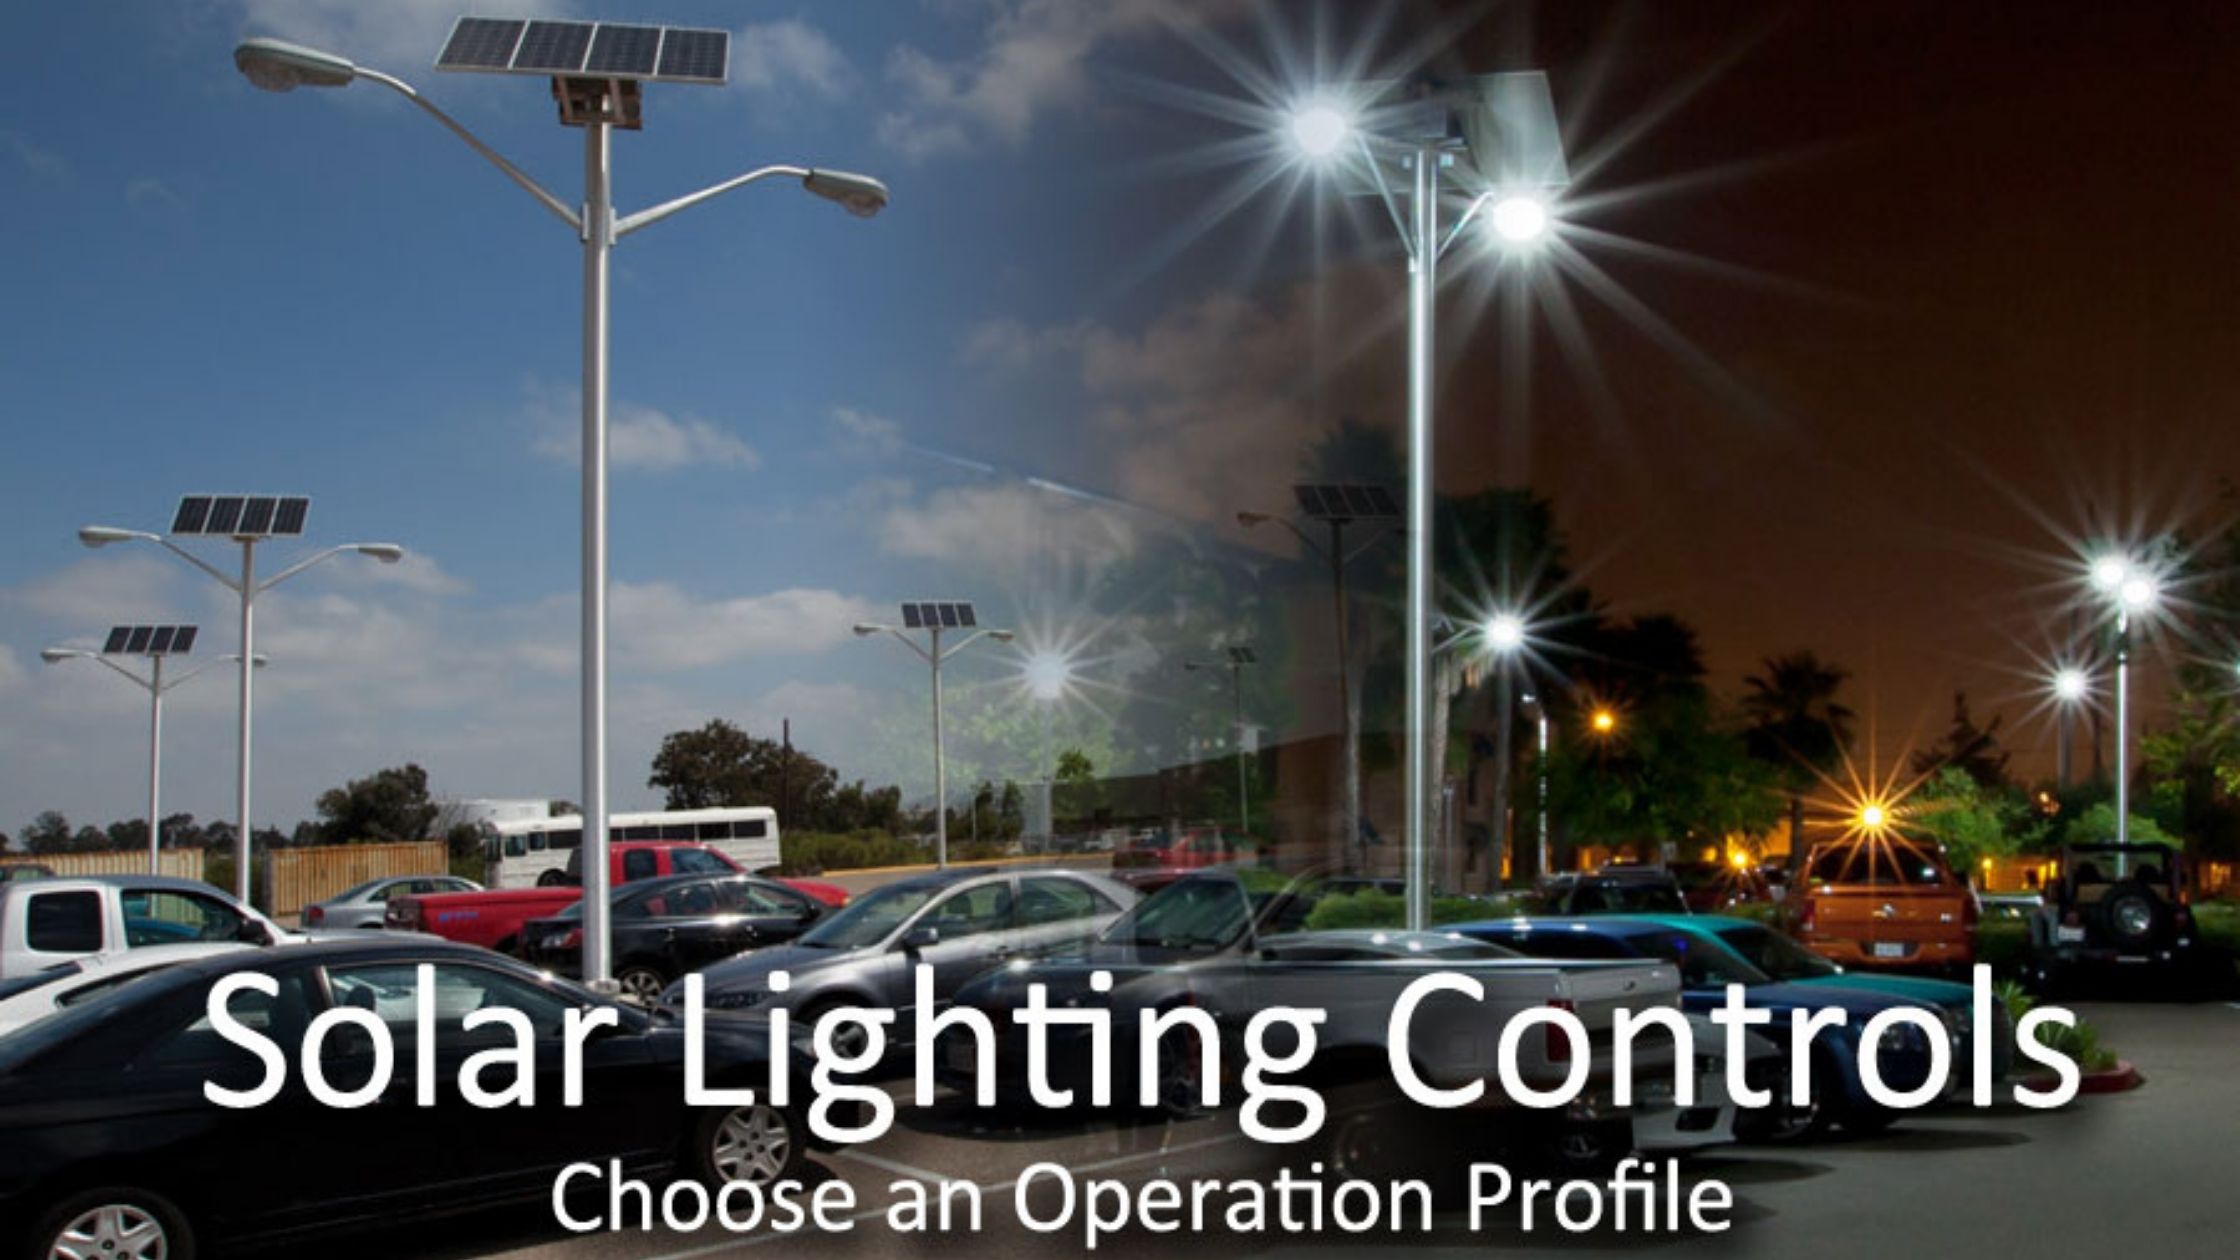 Solar Lighting Design Guide – Choose an Operation Profile